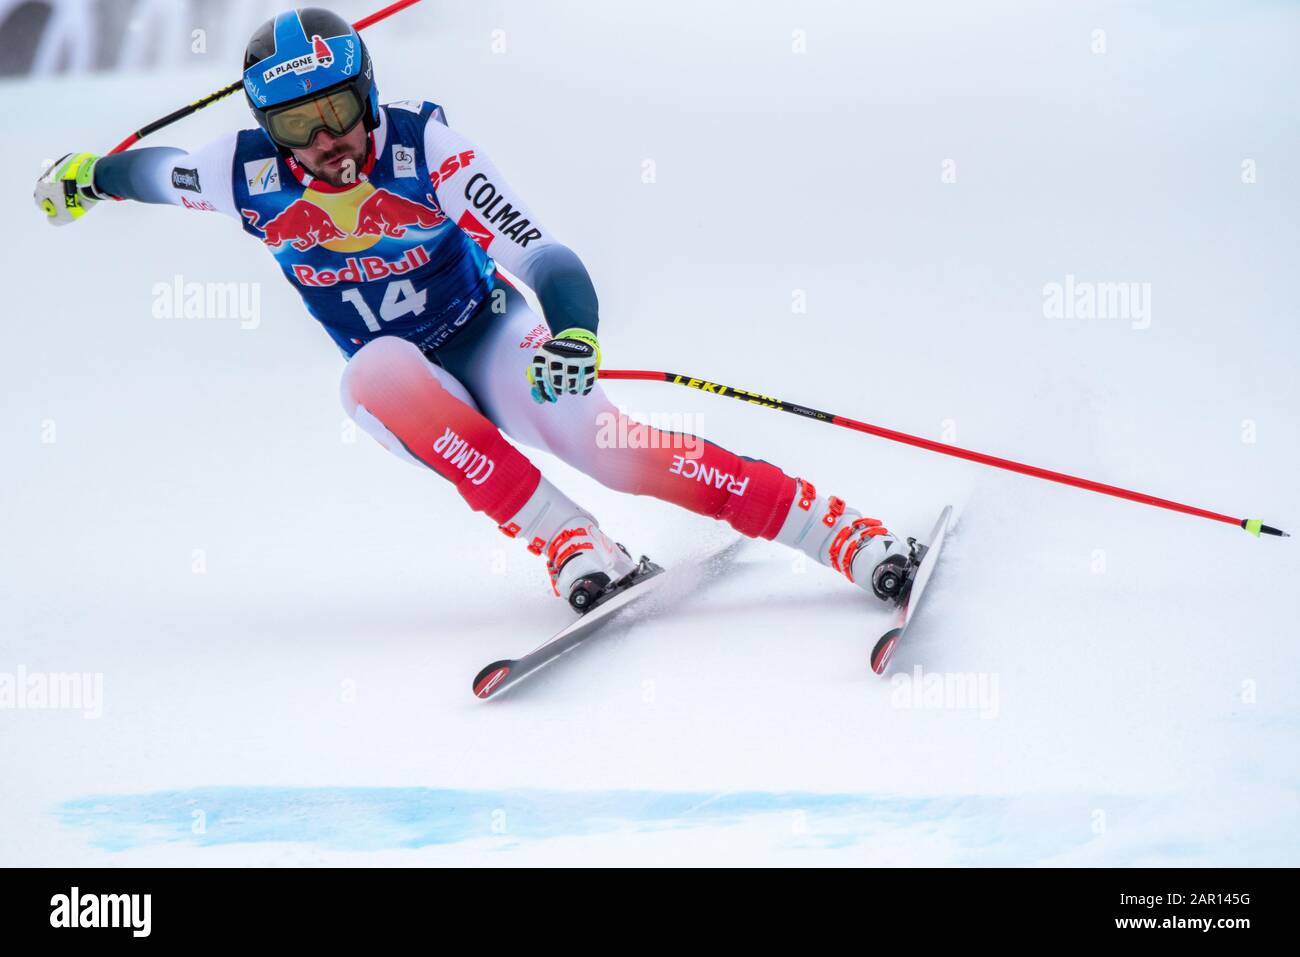 Kitzbuehel, Austria. 25th gennaio 2020. Maxence Muzaton di Francia presso lo Ski Alpin: 80. Hahnenkamm Race 2020 - Audi FIS Alpine Ski World Cup - Downhill maschile alla Streif il 25 gennaio 2020 a Kitzbuehel, AUSTRIA. Foto Stock